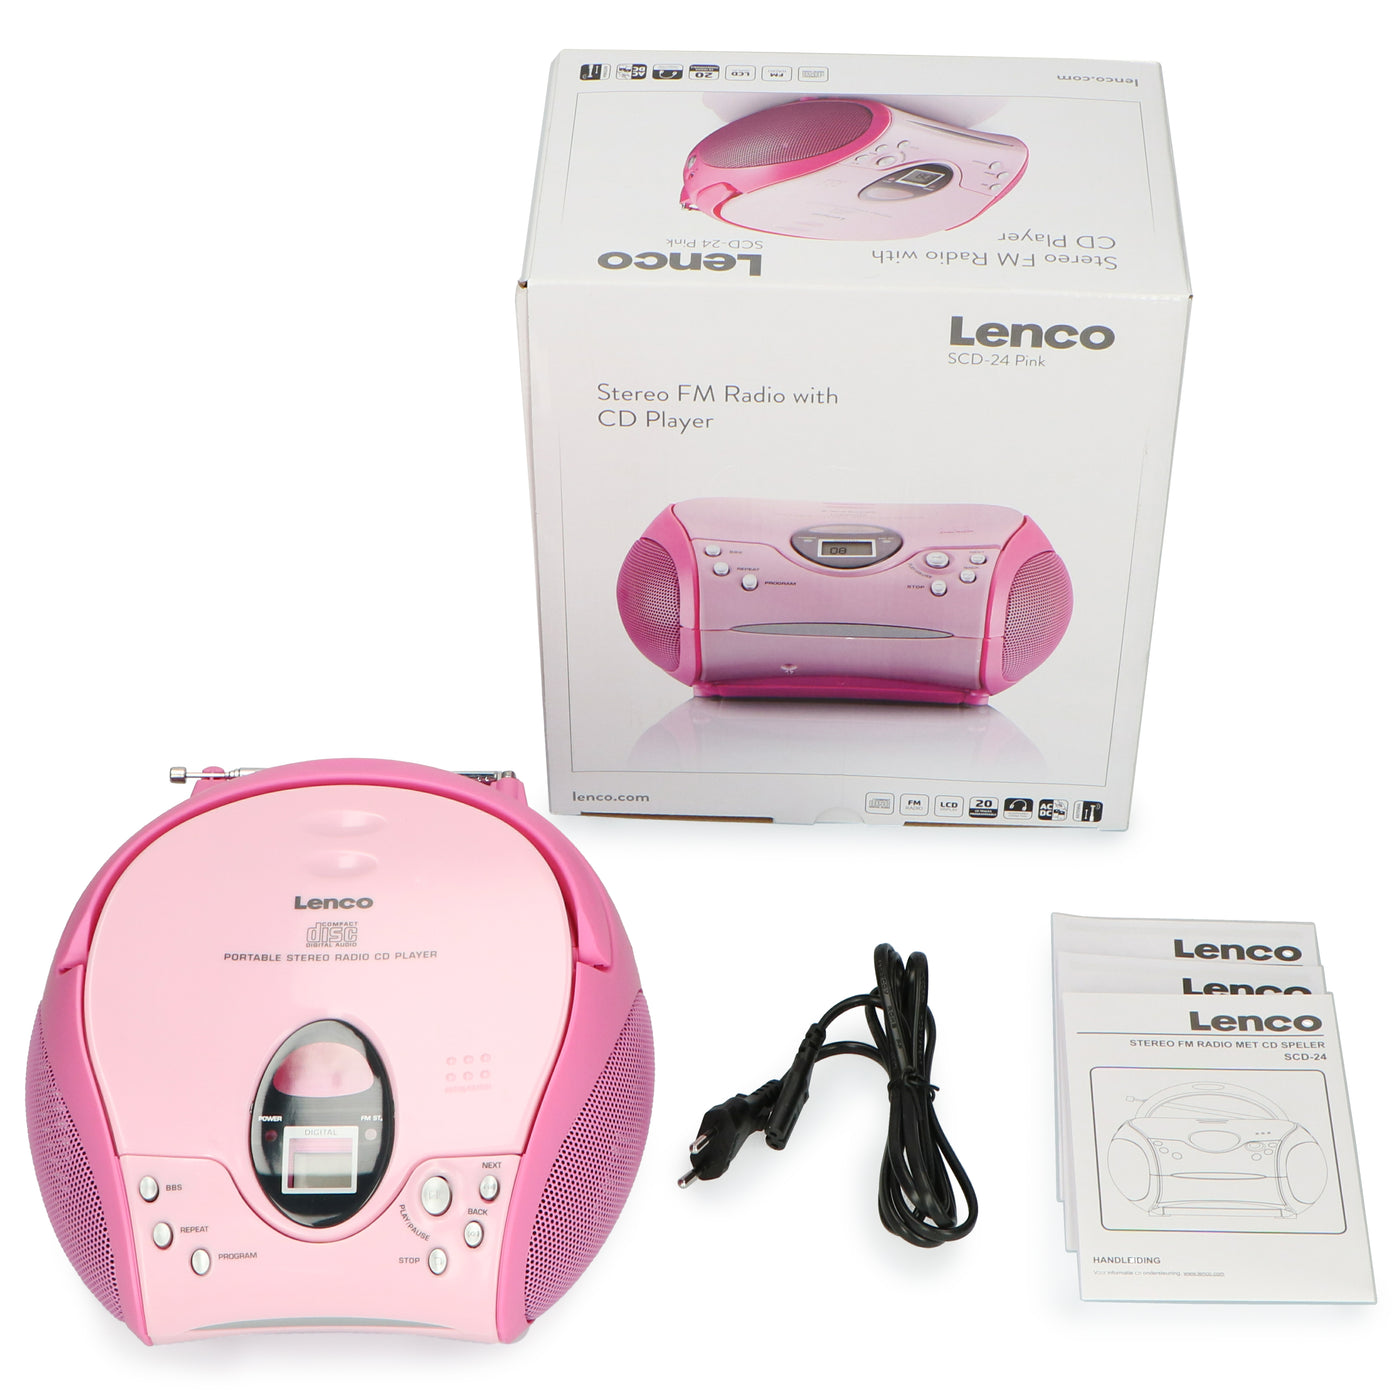 – - stereo LENCO Portable player SCD-24 radio Lenco CD FM Pink with -Catalog Pink -